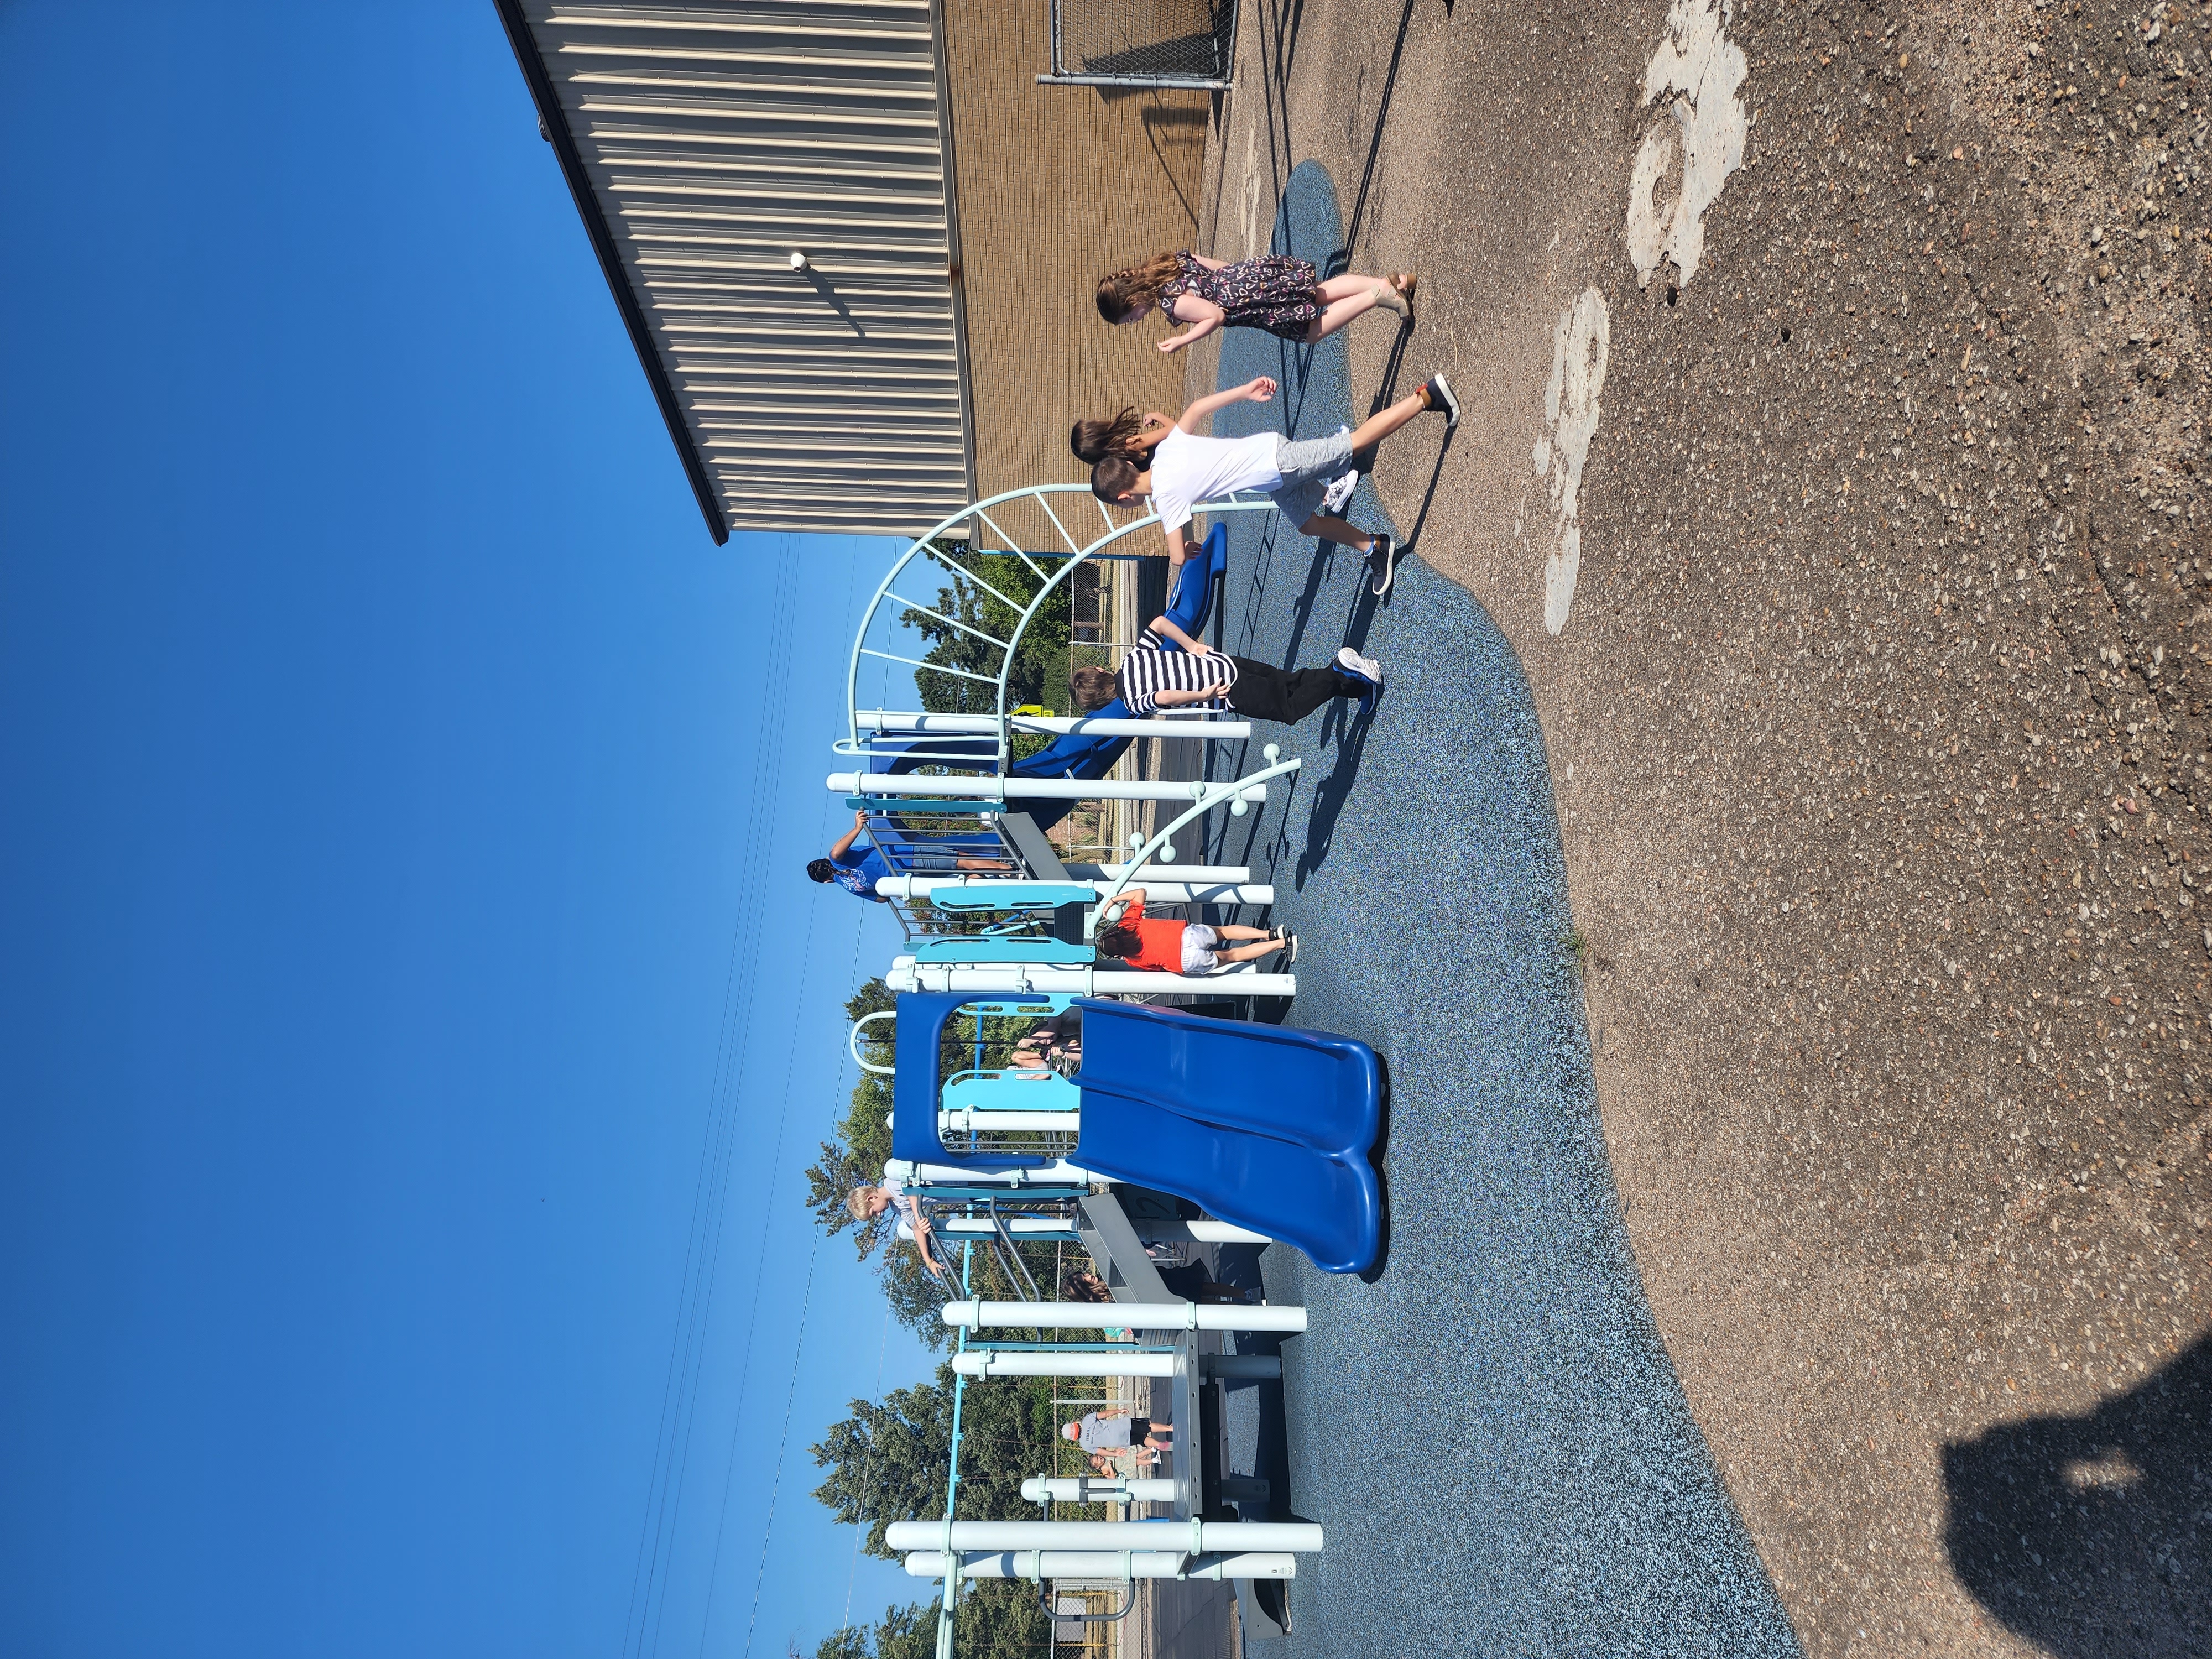 Students on Bickerdyke playground.